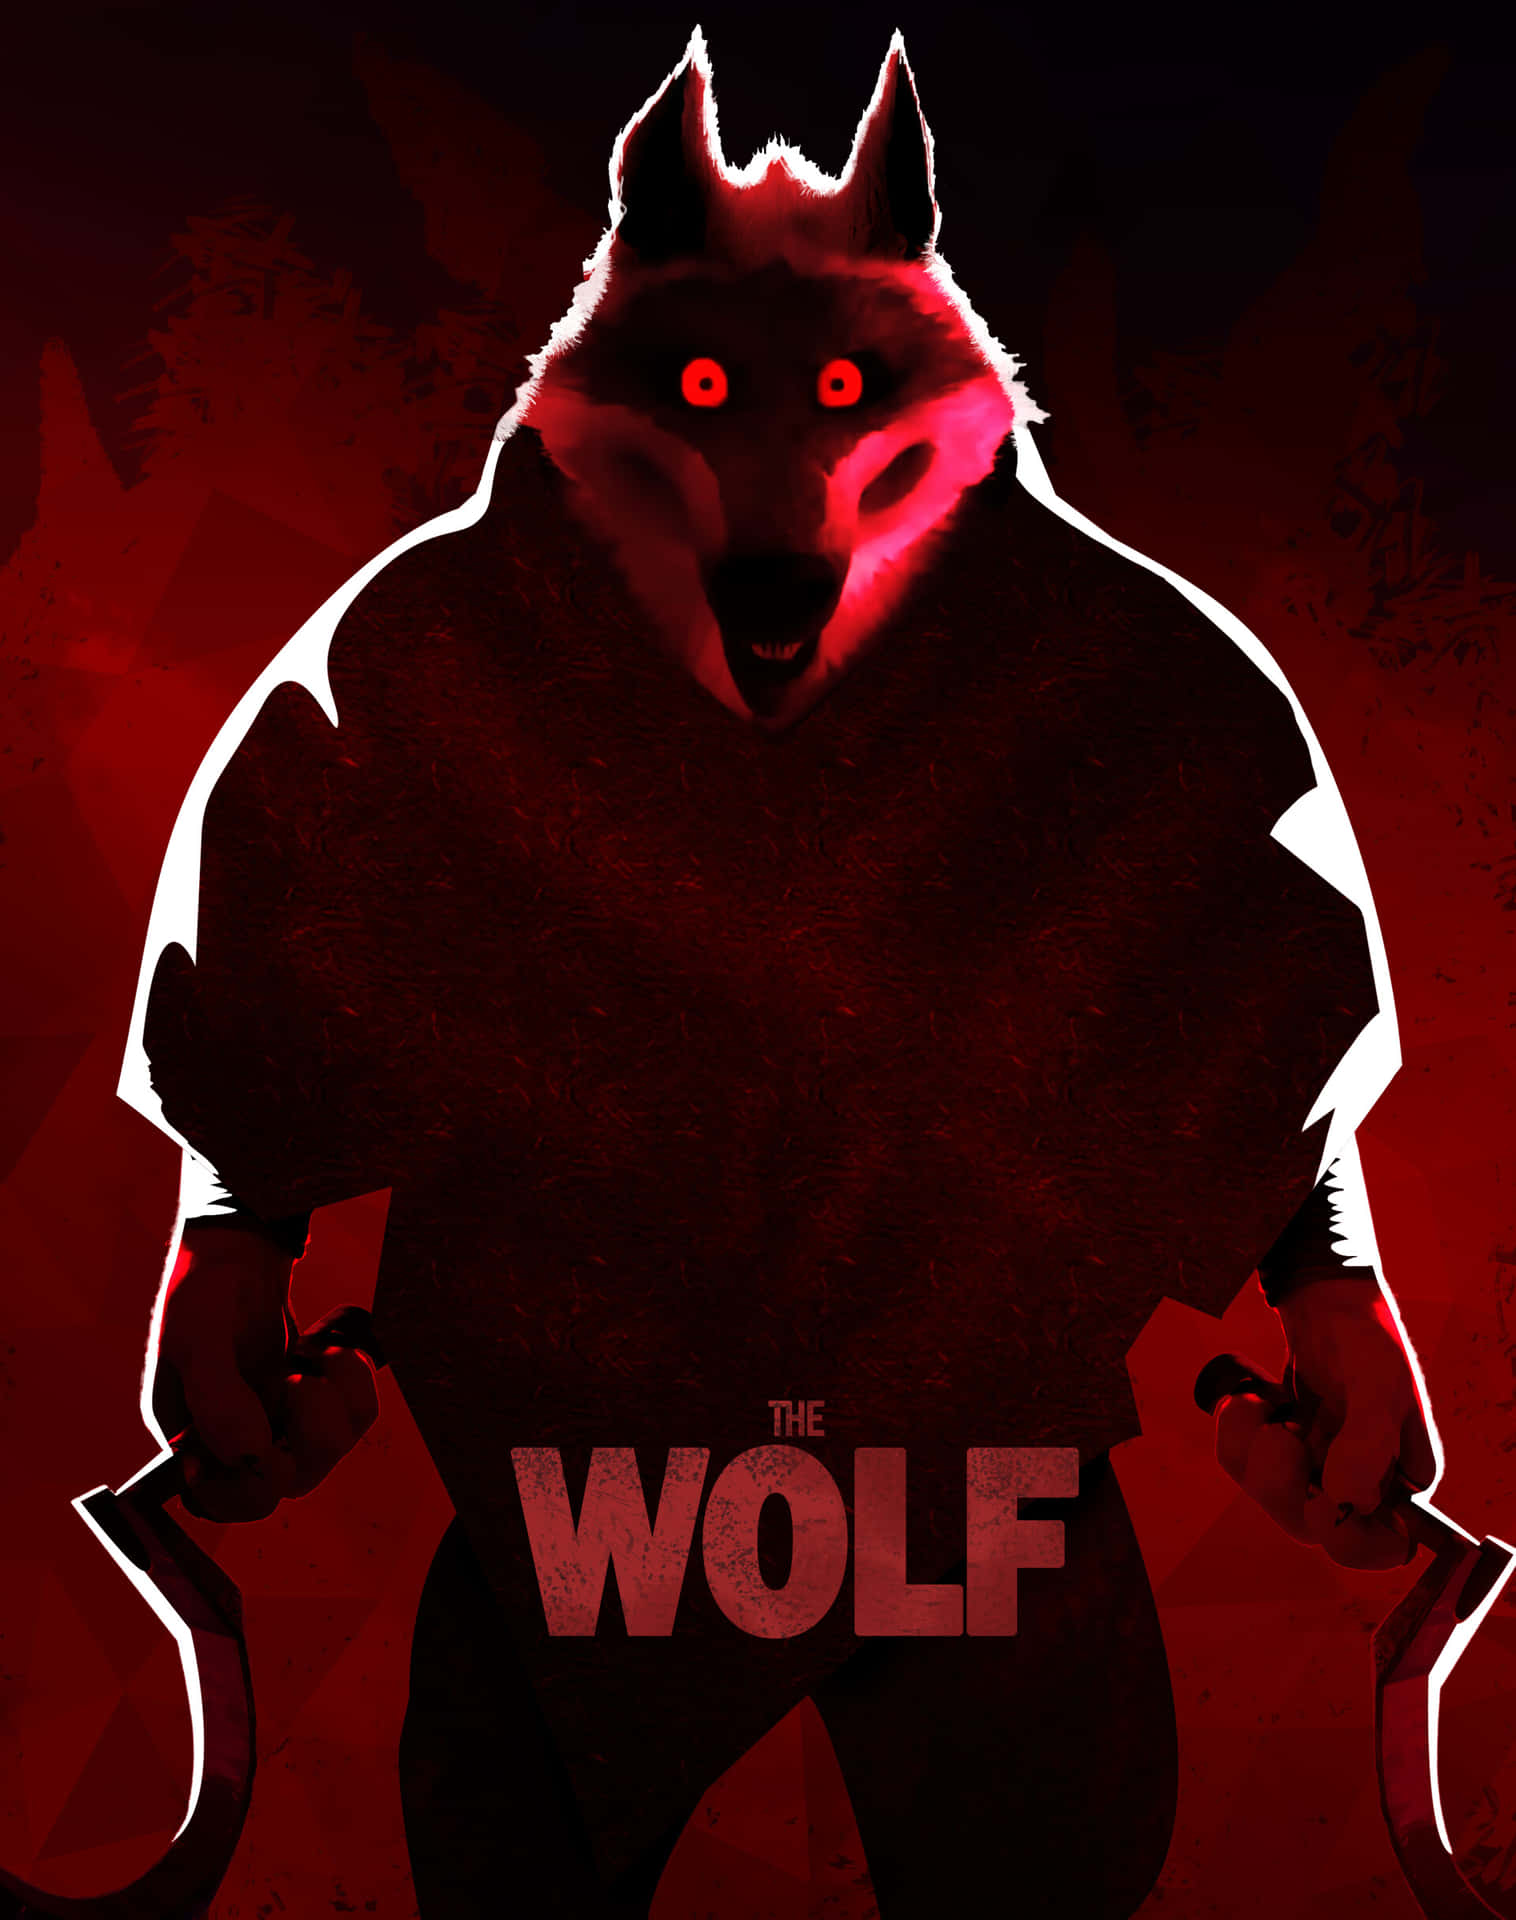 Intimidating Red Wolf Artwork Wallpaper